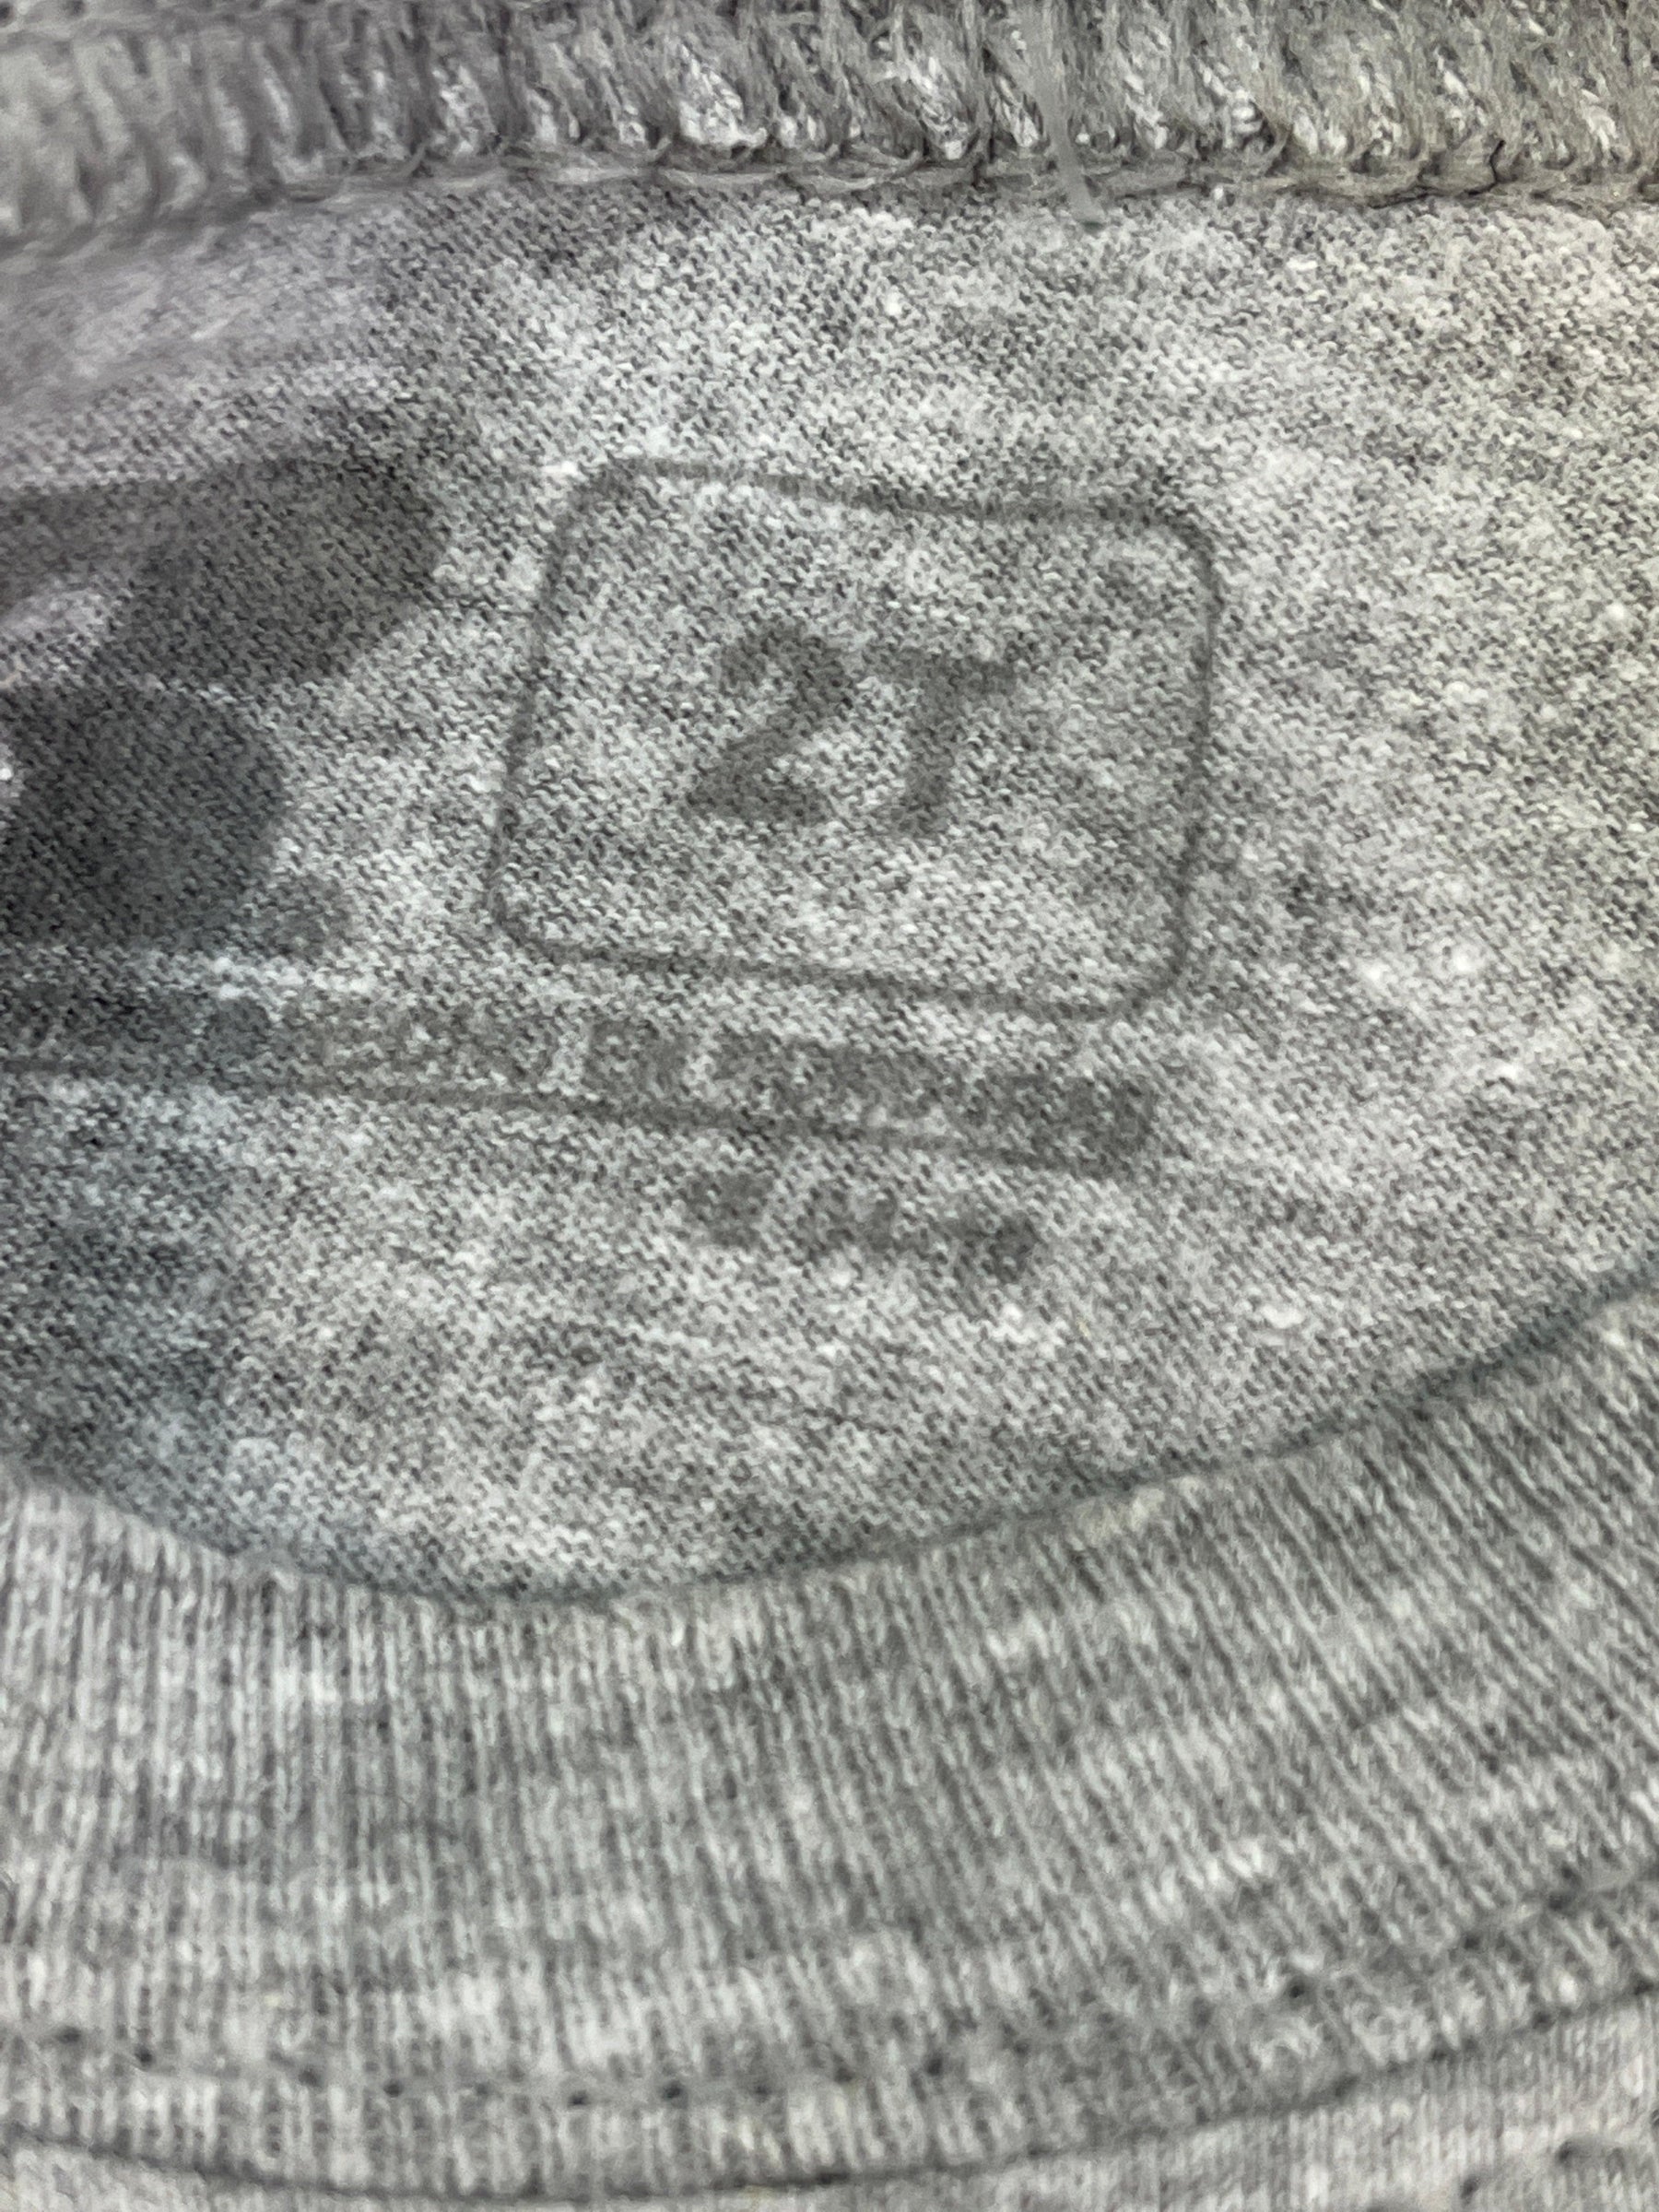 NCAA Arkansas Razorbacks Grey T-Shirt Toddler 2T